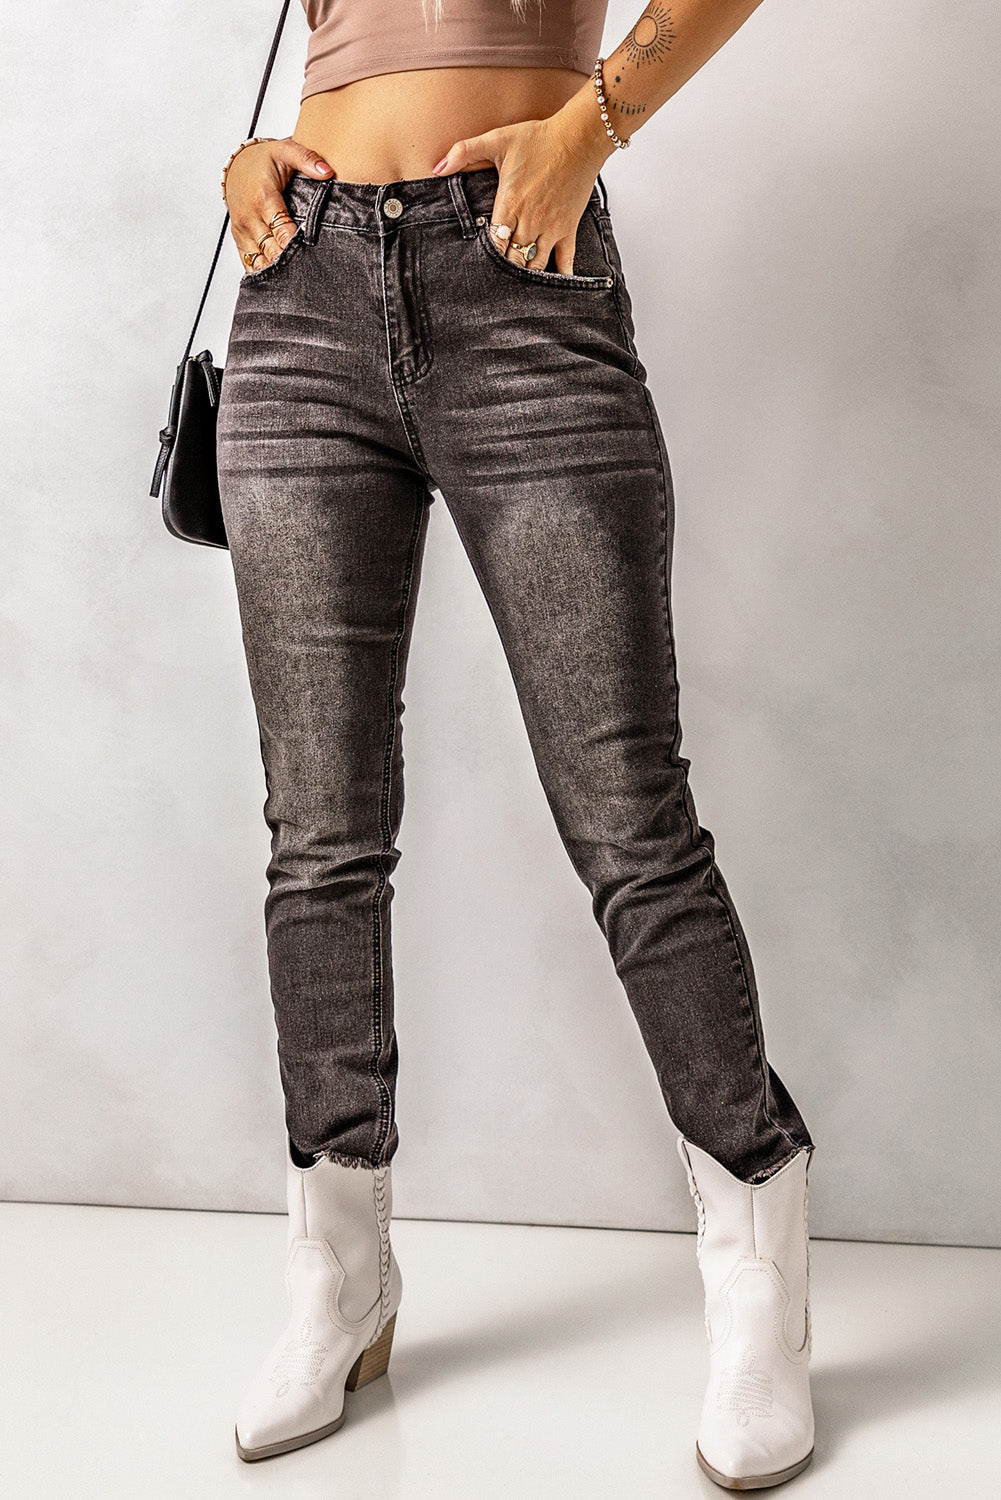 Black High Waist Ankle-Length Skinny Jeans Black 72%Cotton+26%Polyester+2%Elastane Jeans JT's Designer Fashion